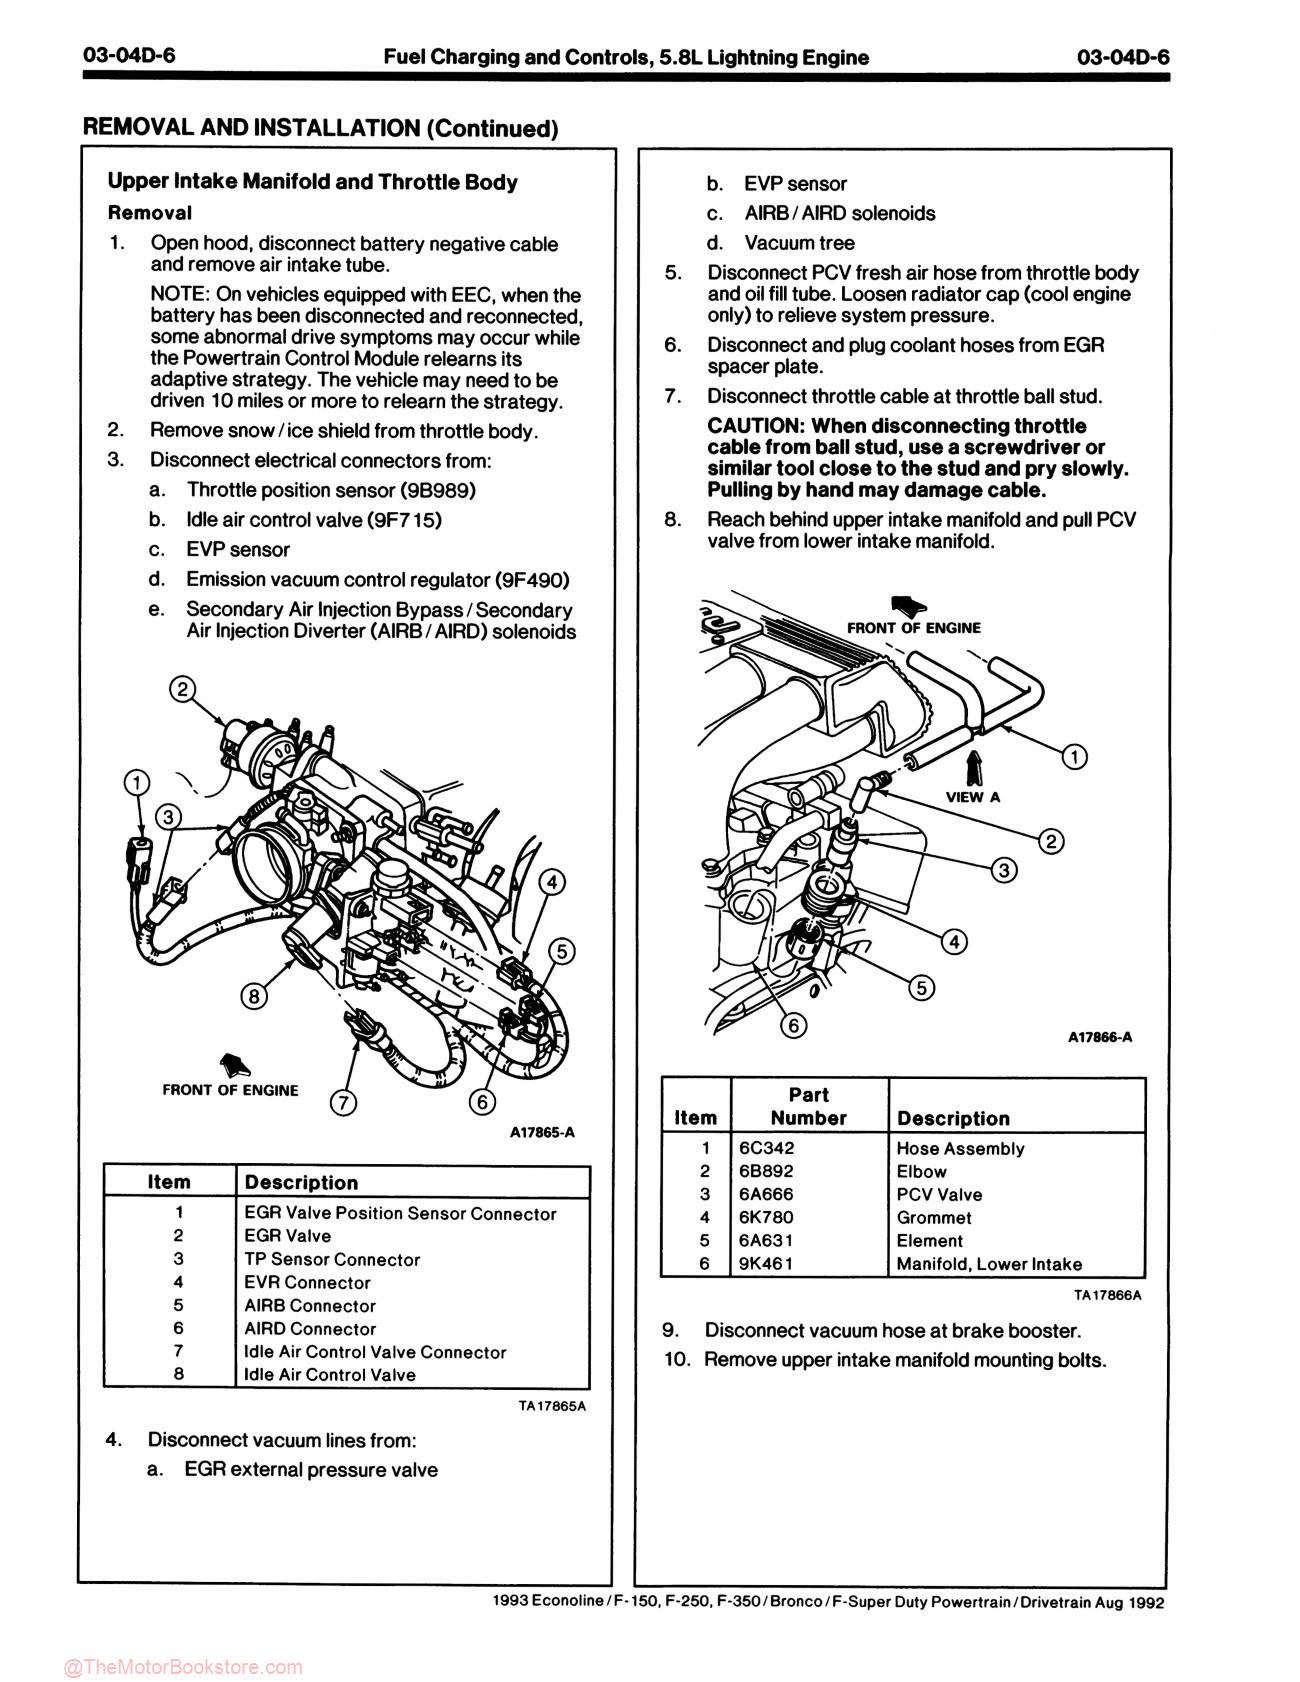 1993 Ford F-150-350 Truck, Econoline, Bronco Service Manual - Sample Page 3